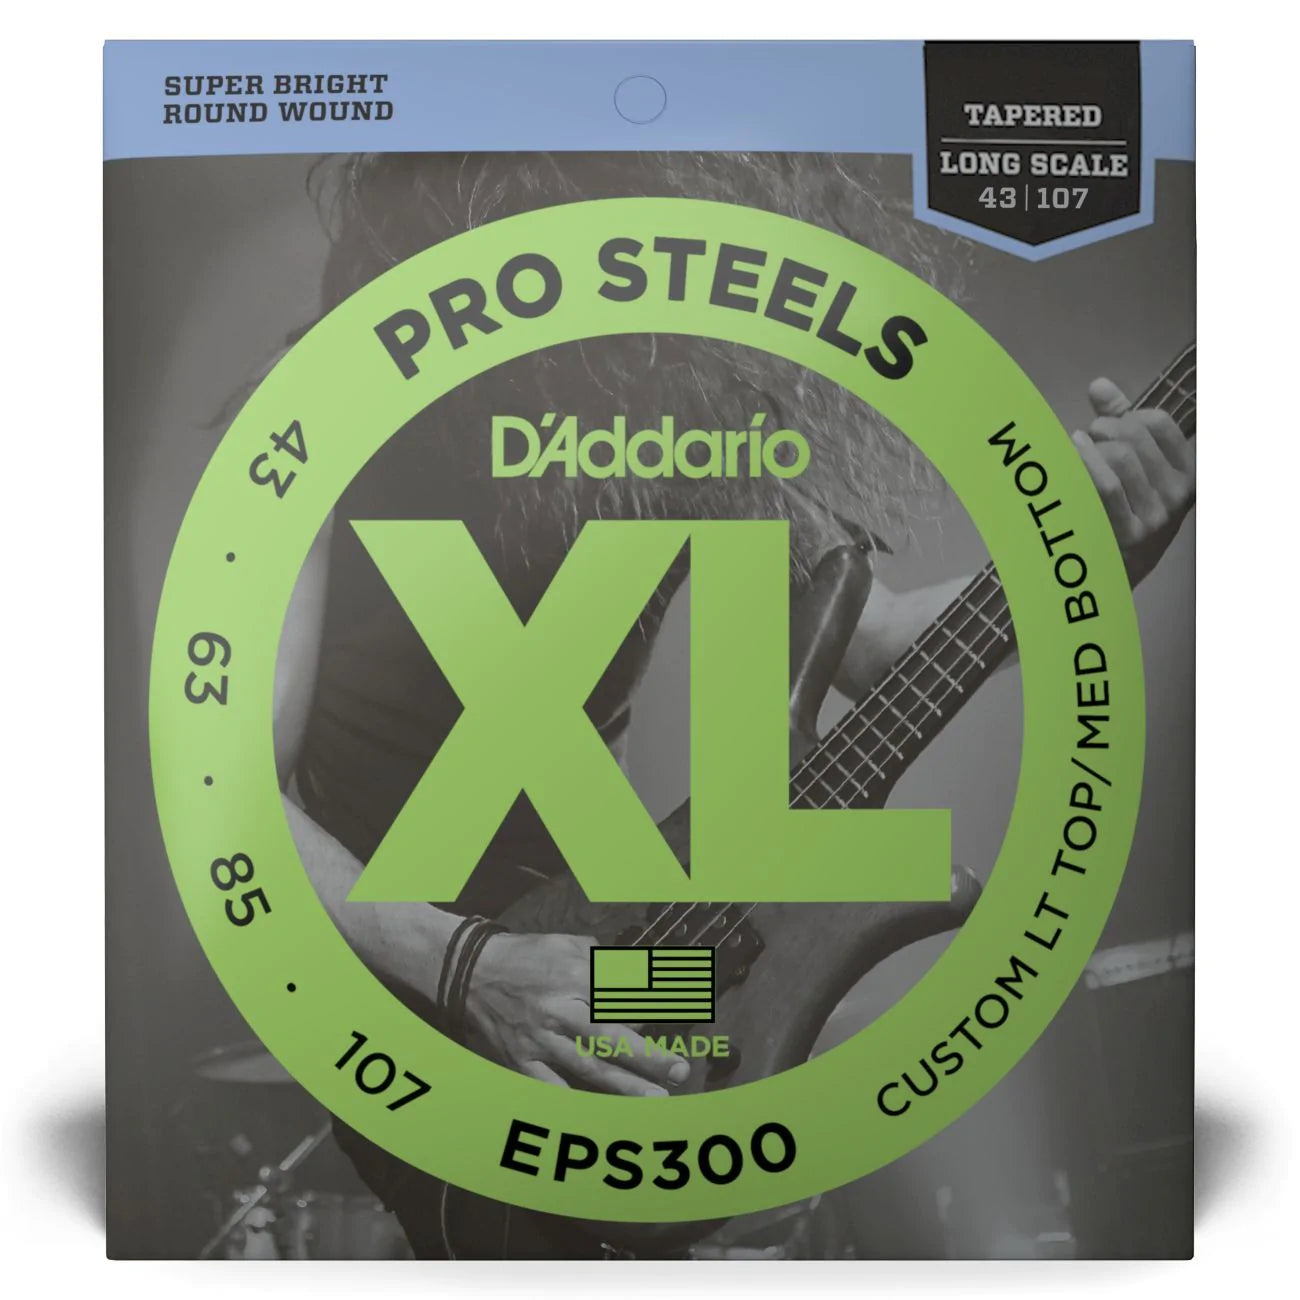 D'Addario EPS300 | XL ProSteels Bass Strings 43-107 Gauge | Custom Light | Tapered